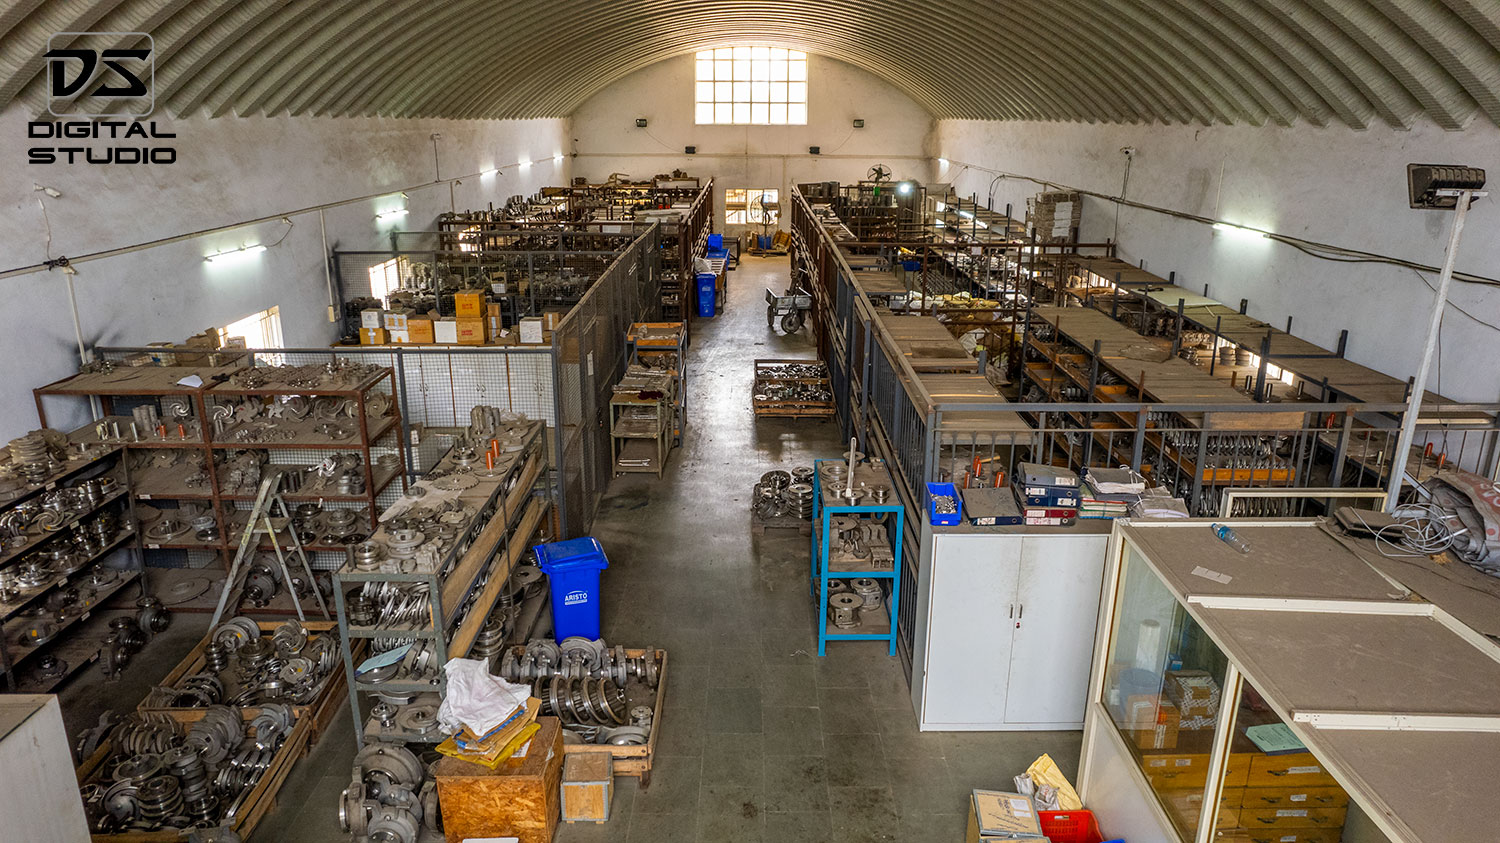 Inside a warehouse - drone photo